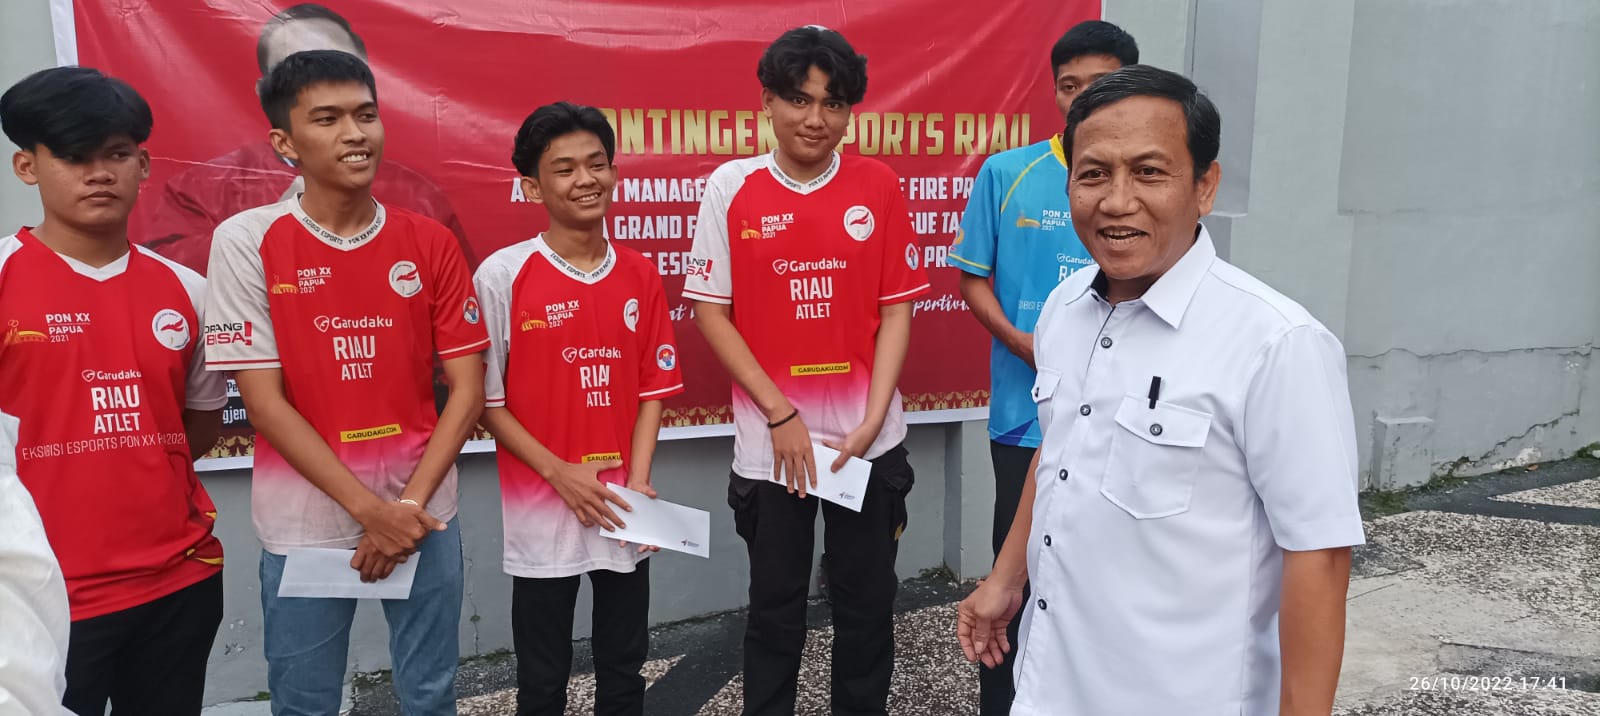 Pengprov ESI Riau Lepas Atlet Team Free Fire Menuju Grand Final Dunia Games League 2022